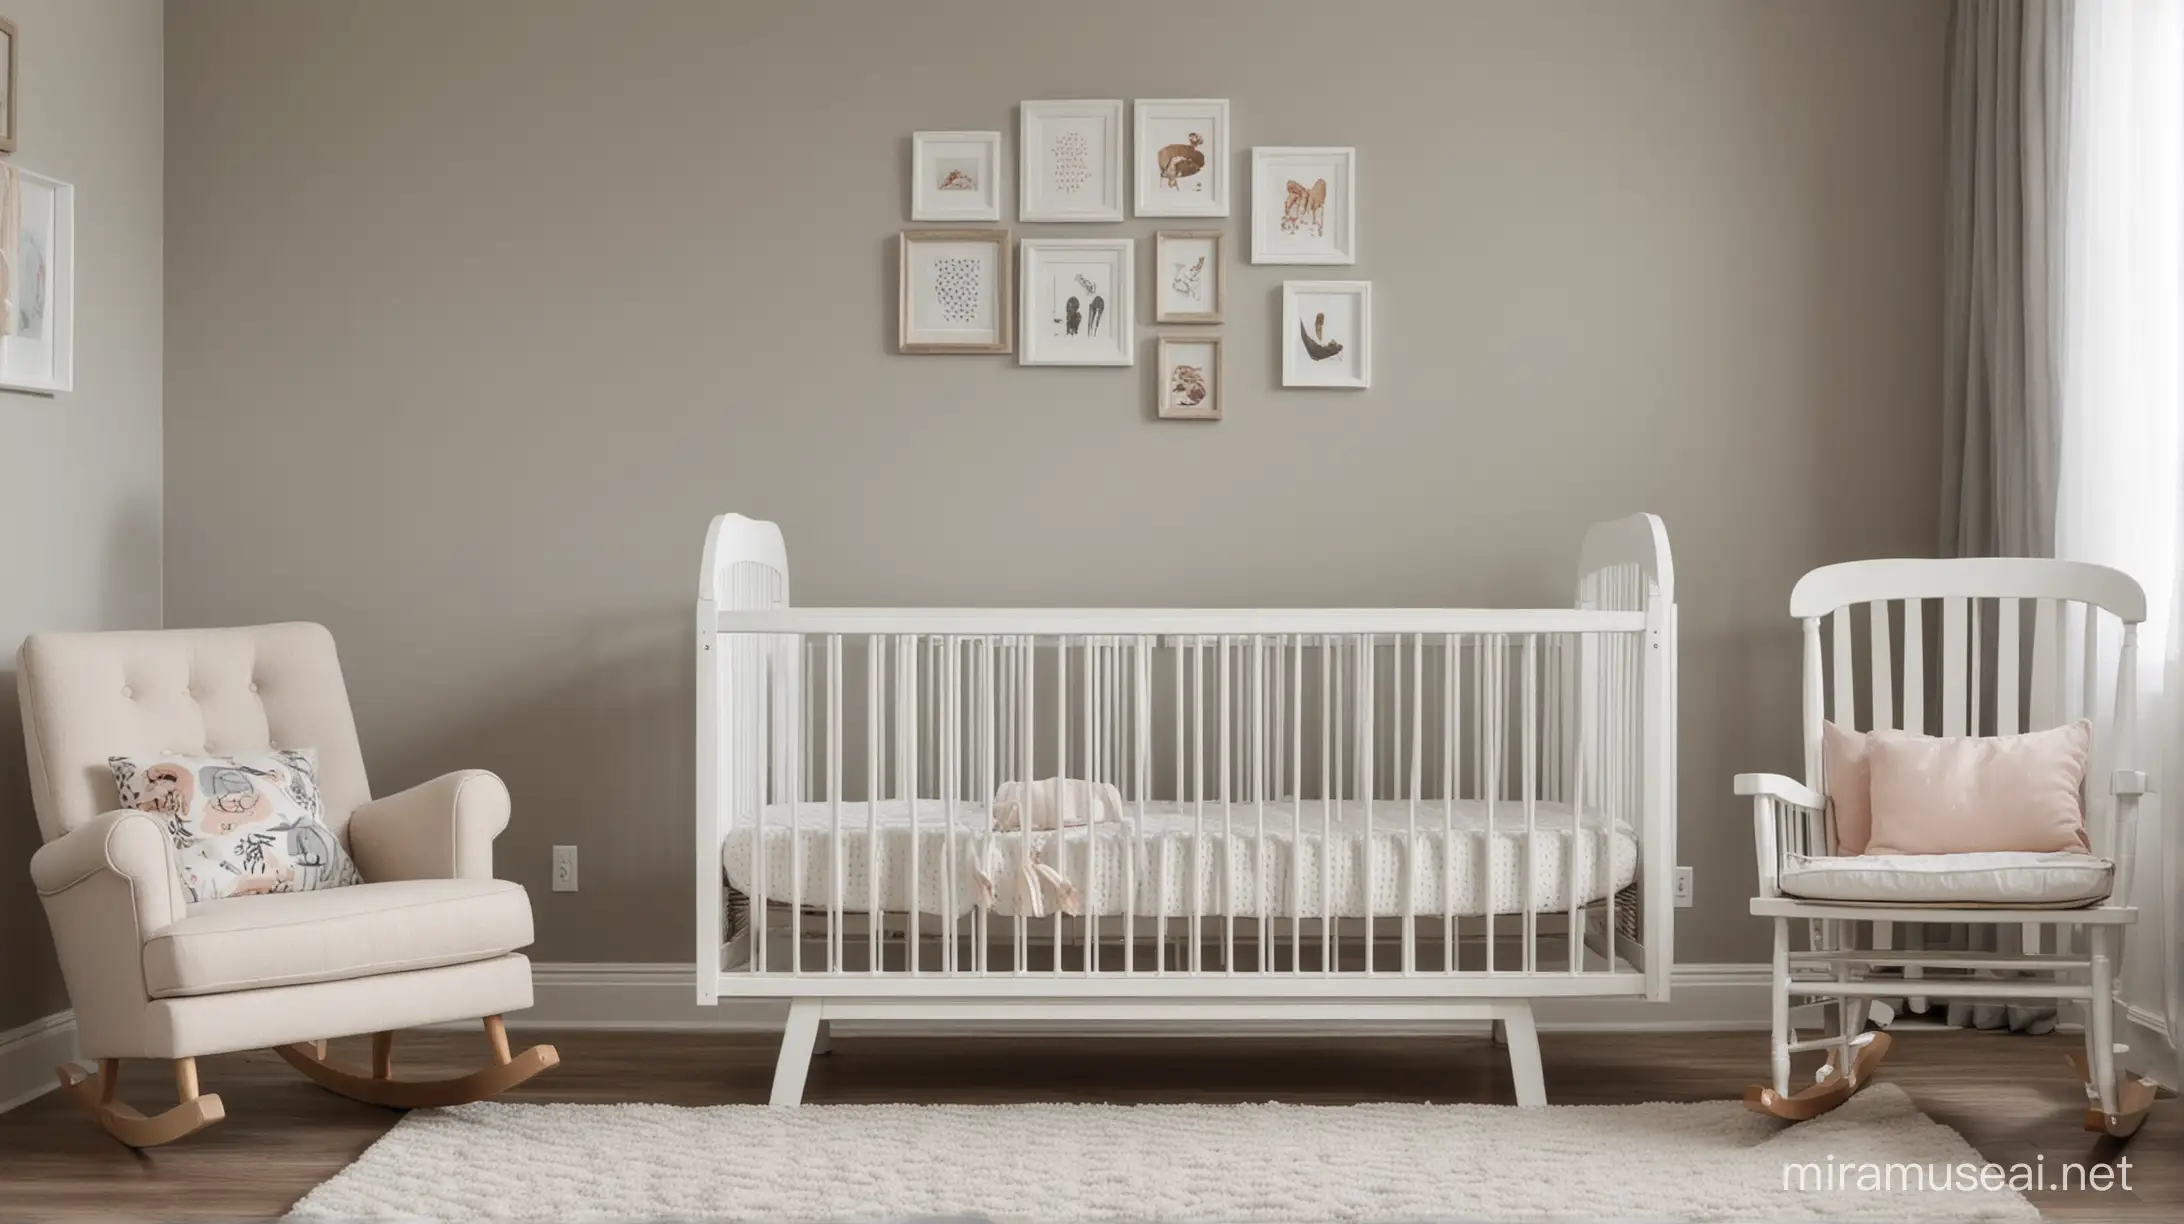 cute nursery room crib and rocking chair

